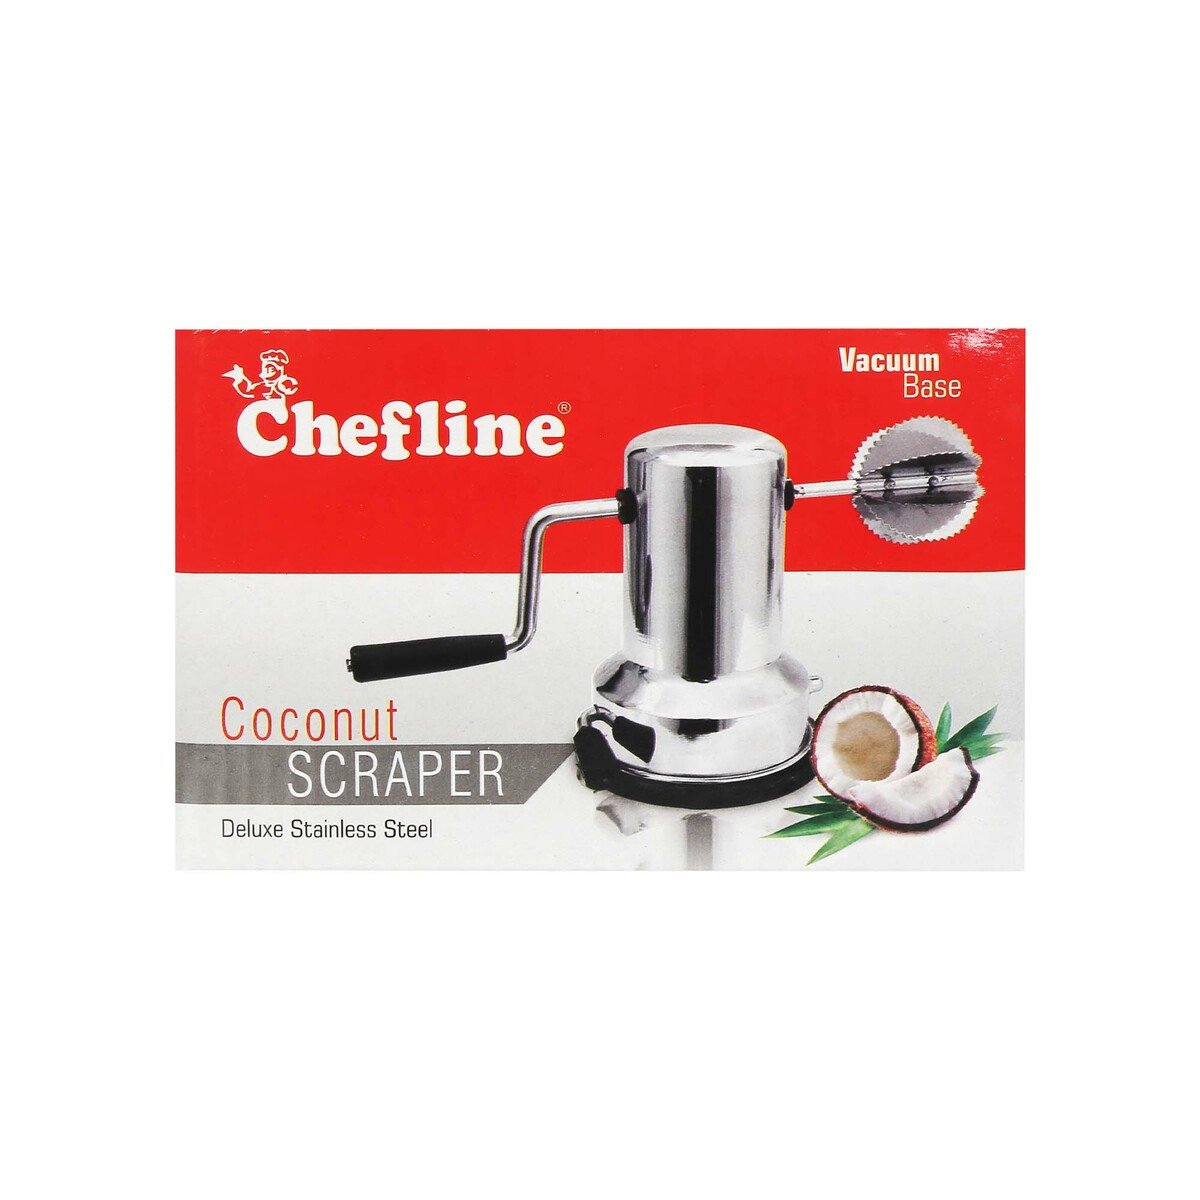 Chefline Stainless Steel Coconut Scraper